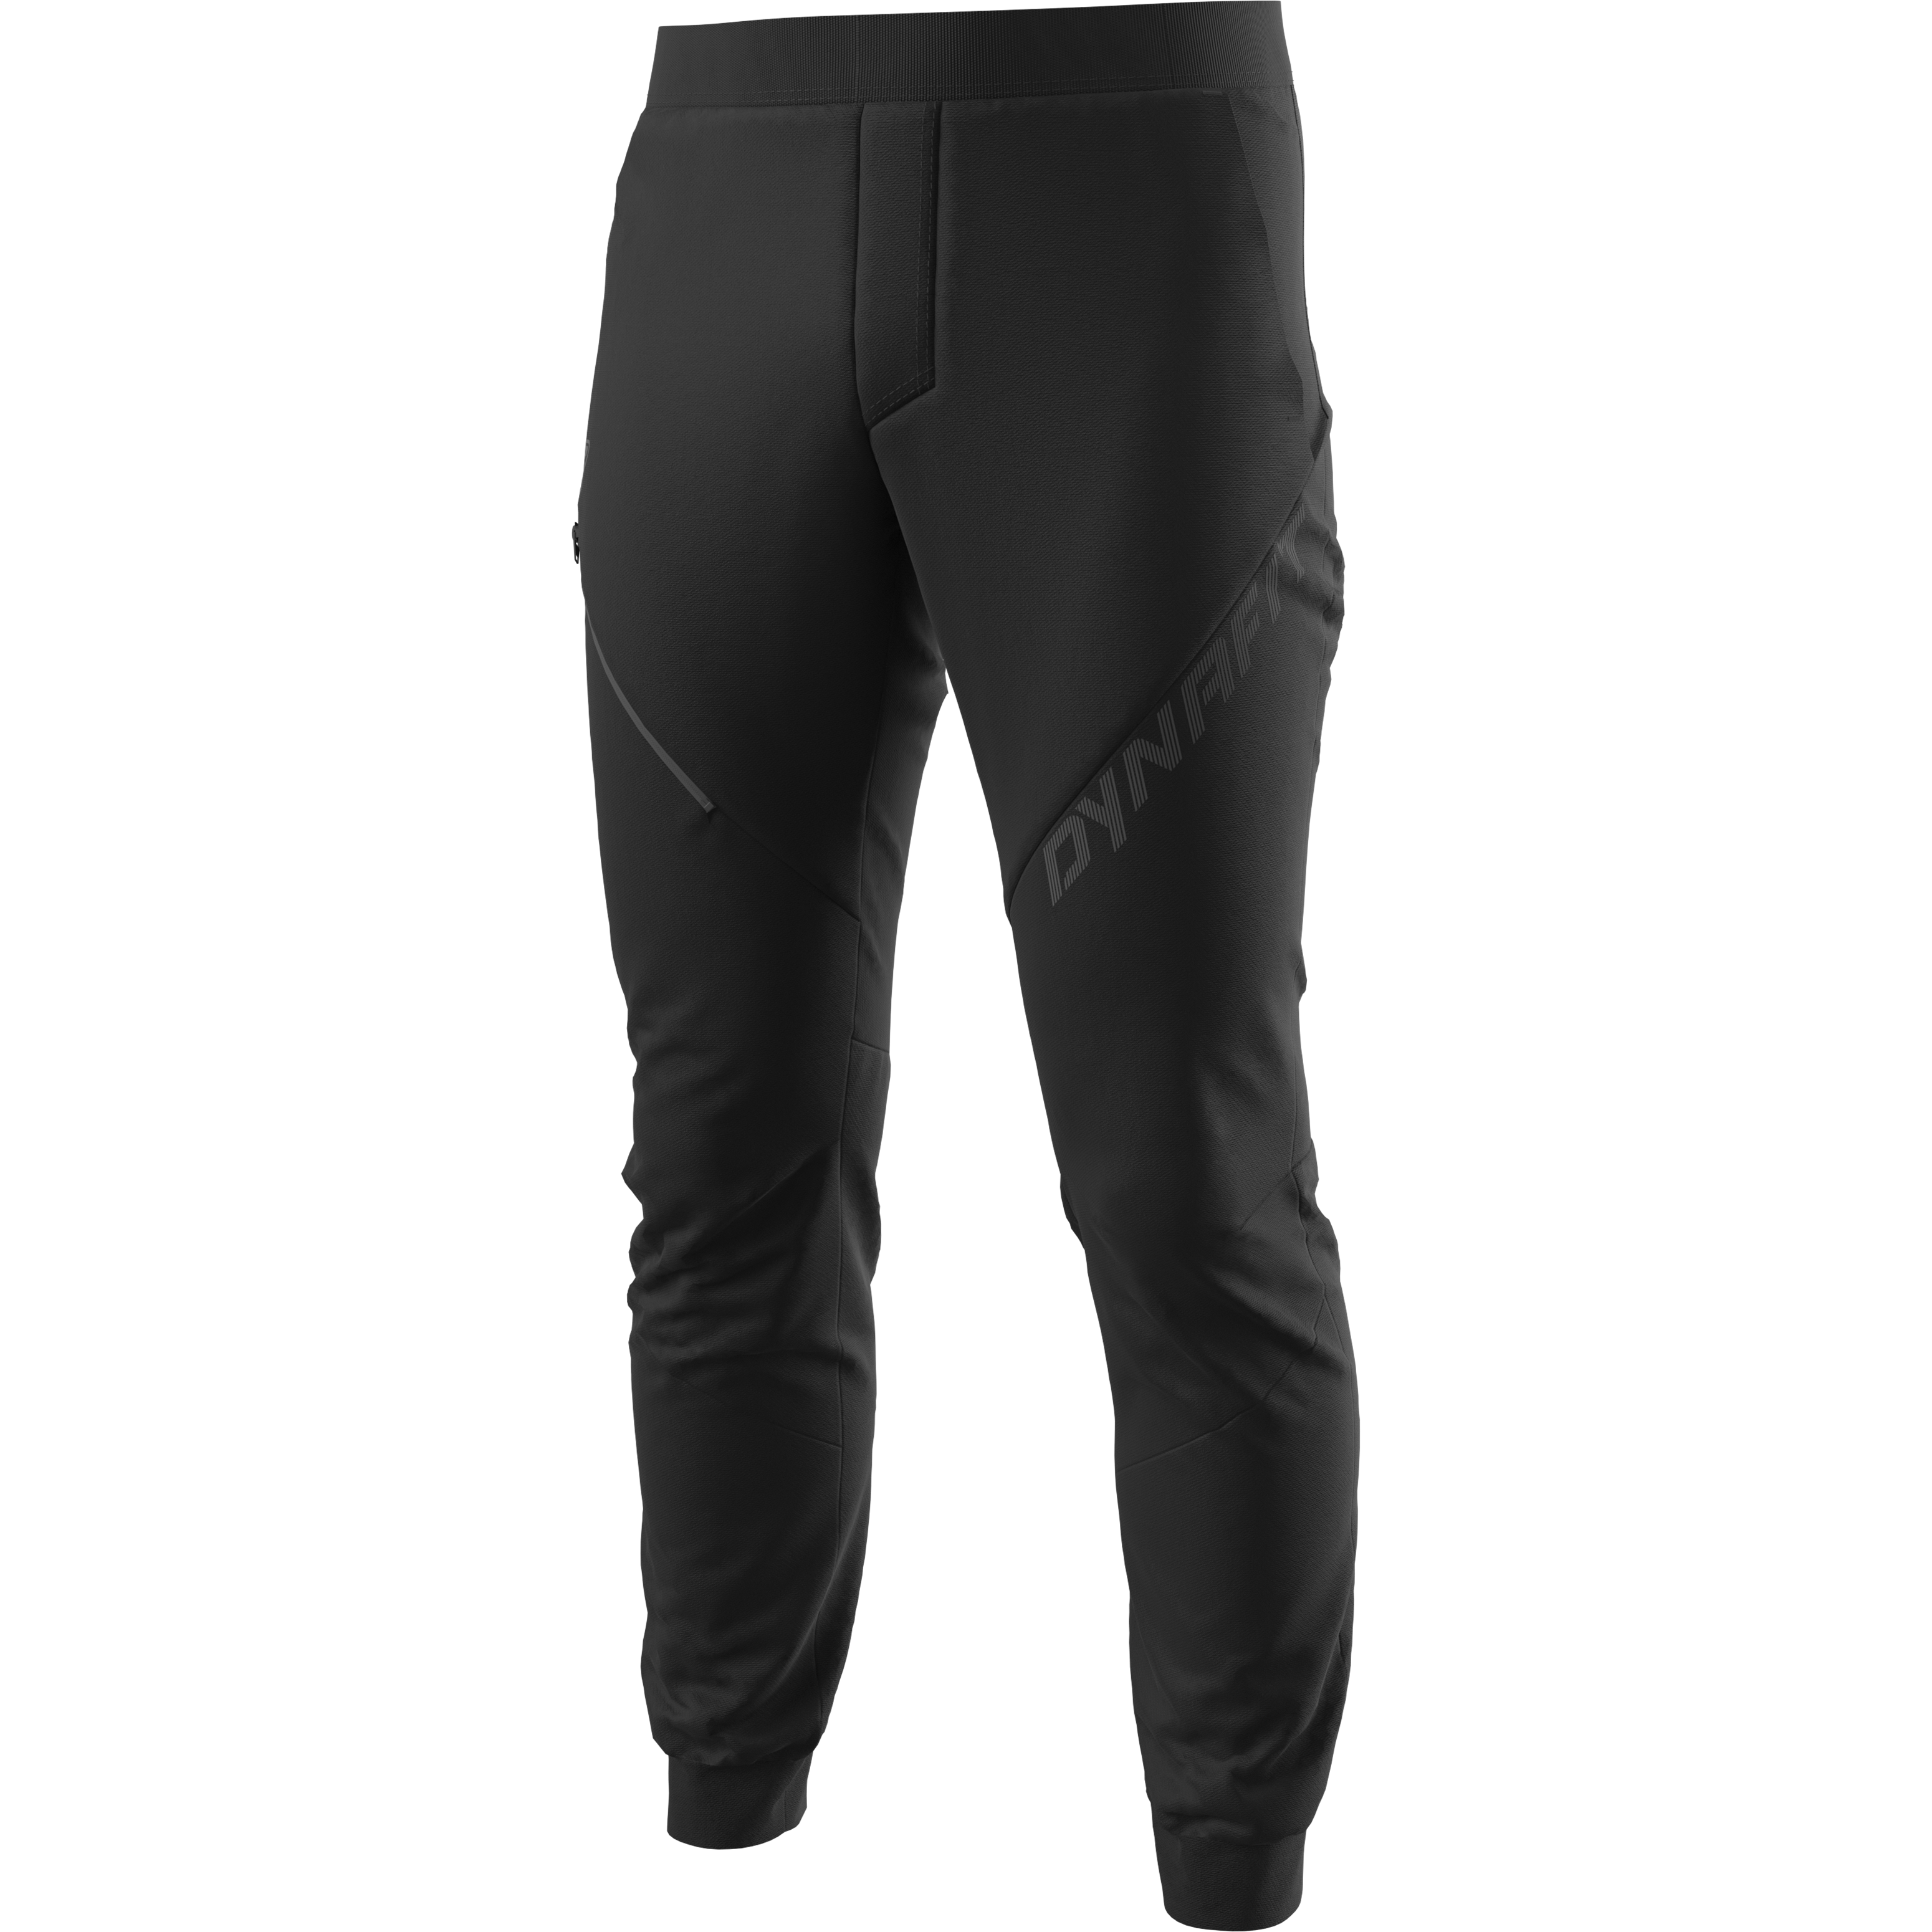 Timberland Mountain Athletics Size L Hiking Outdoor Track Pants Black Nylon  | eBay